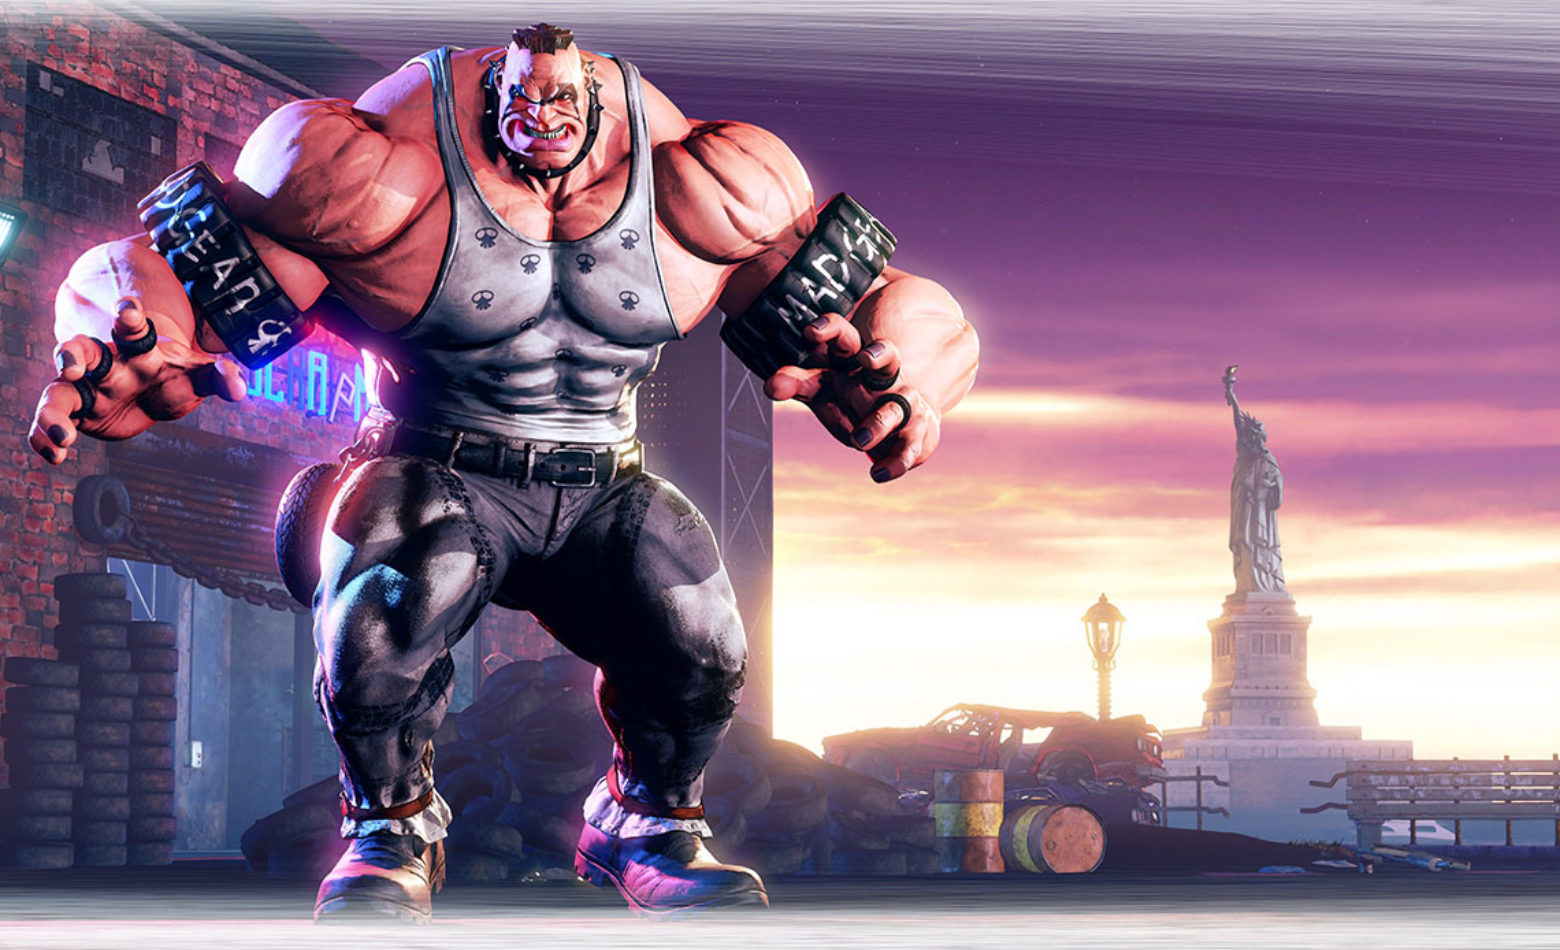 Abigail e o retorno às raízes de Street Fighter 5 | New Game Plus